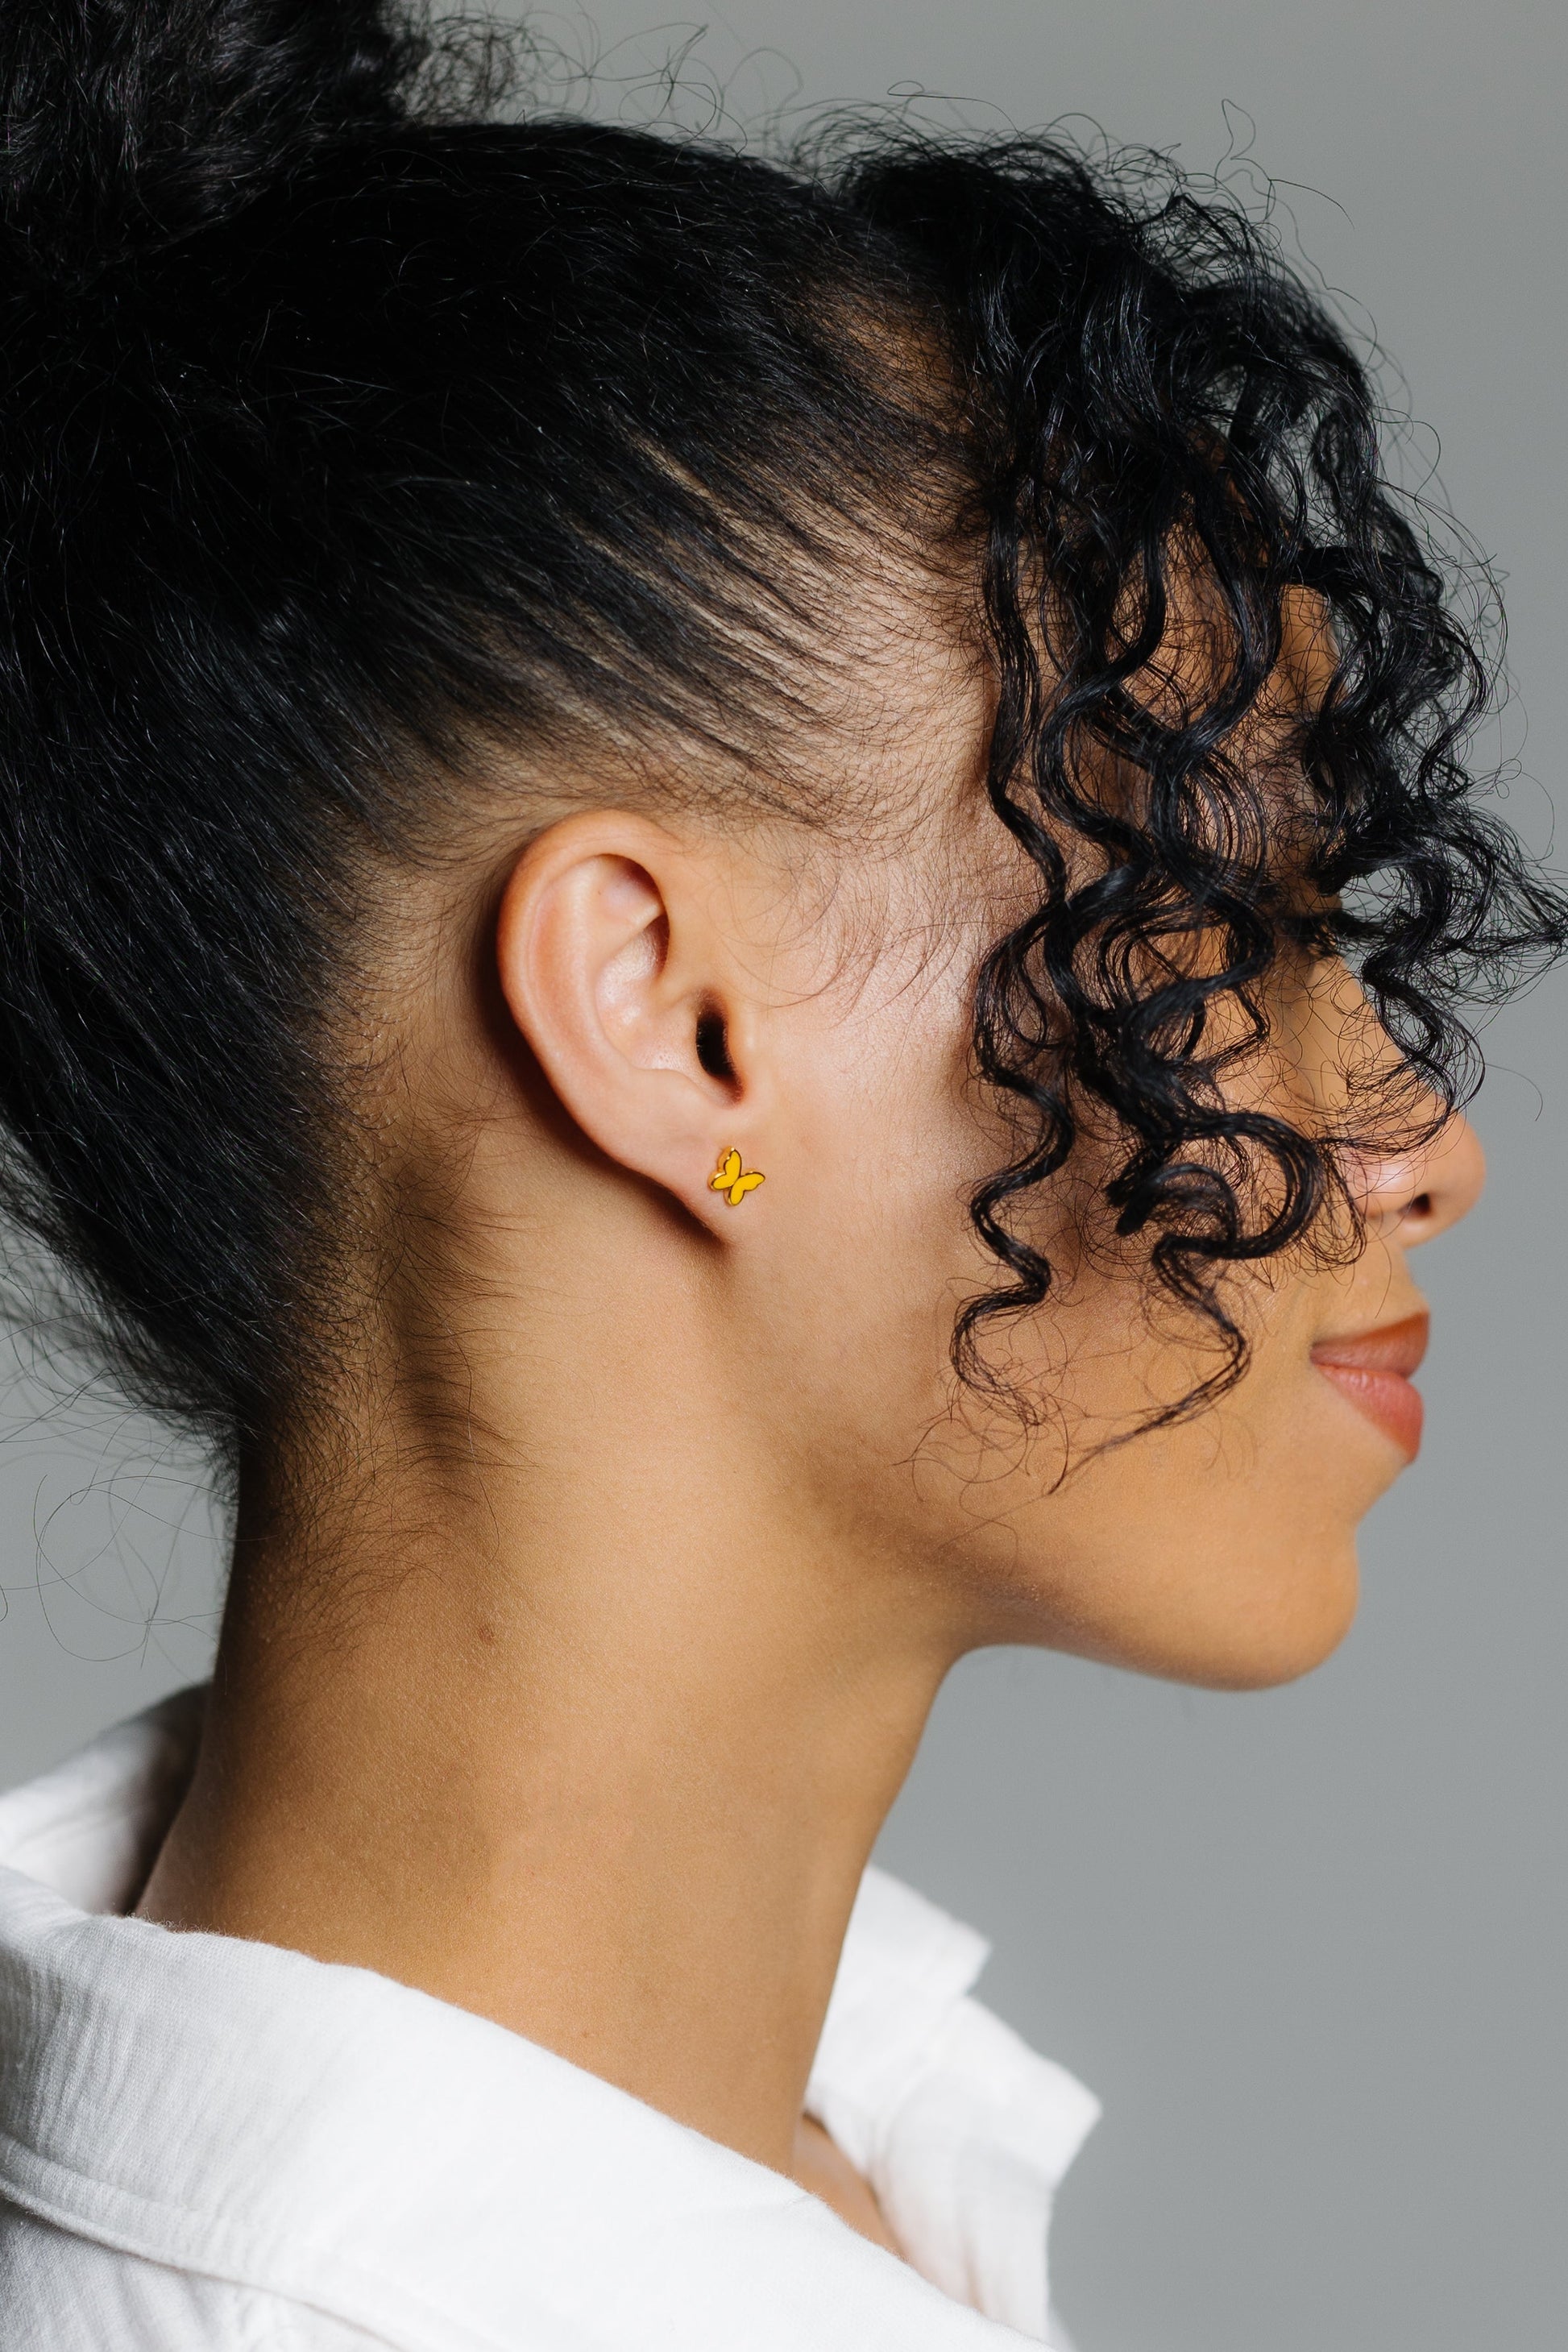 Cove Earrings Dainty Butterfly Gold WOMEN'S EARINGS Cove Accessories 